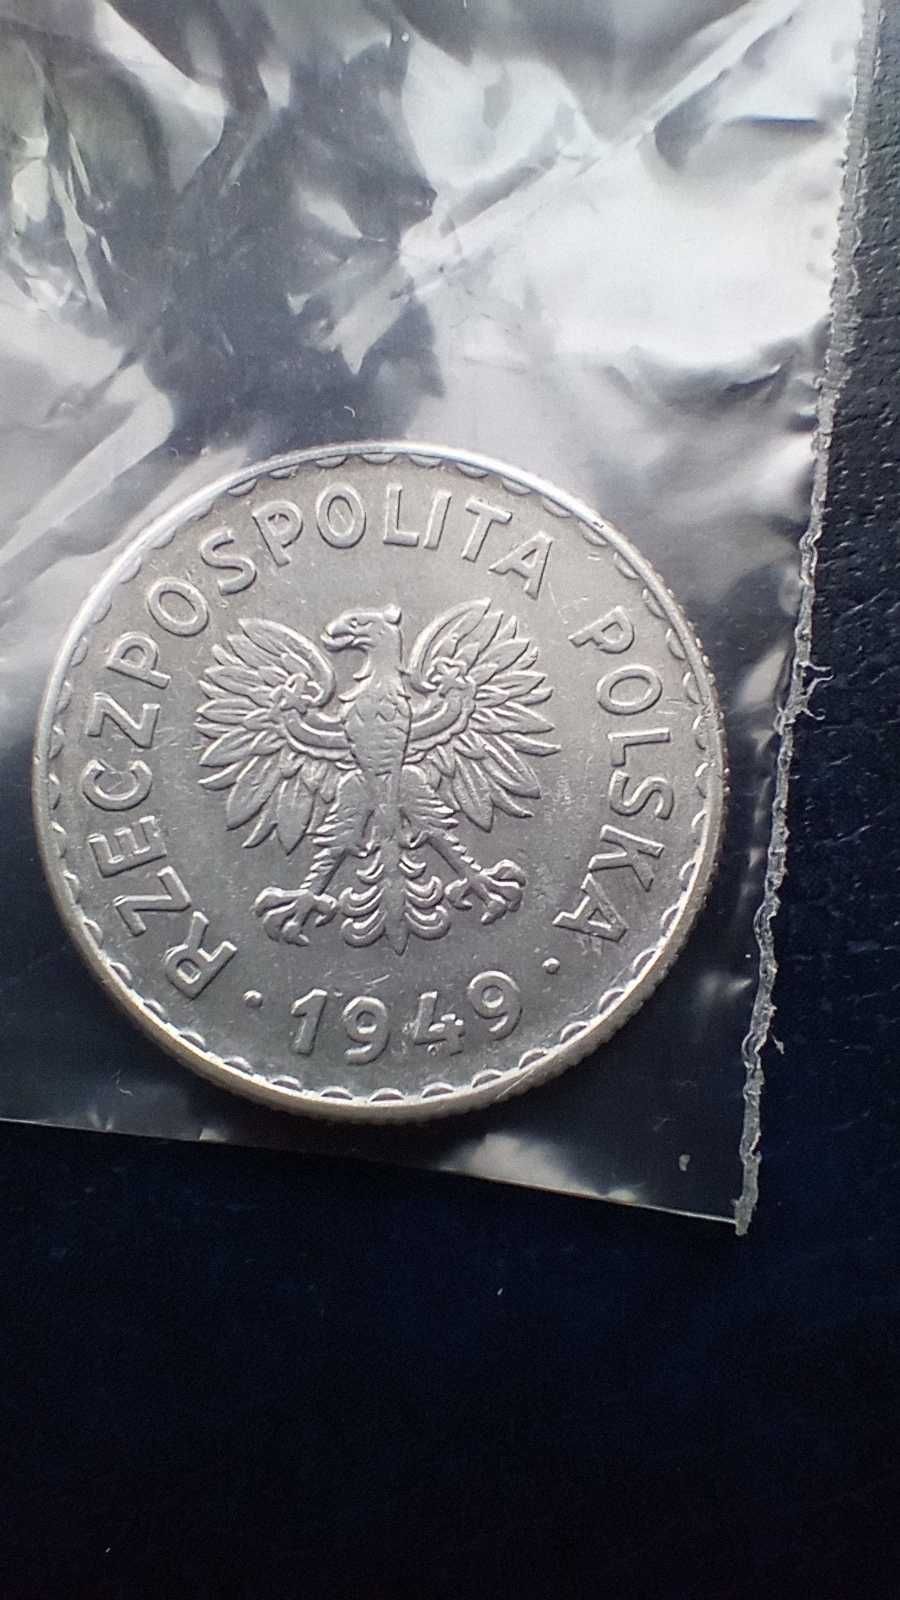 Stare monety 1 złoty 1949 PRL piękna